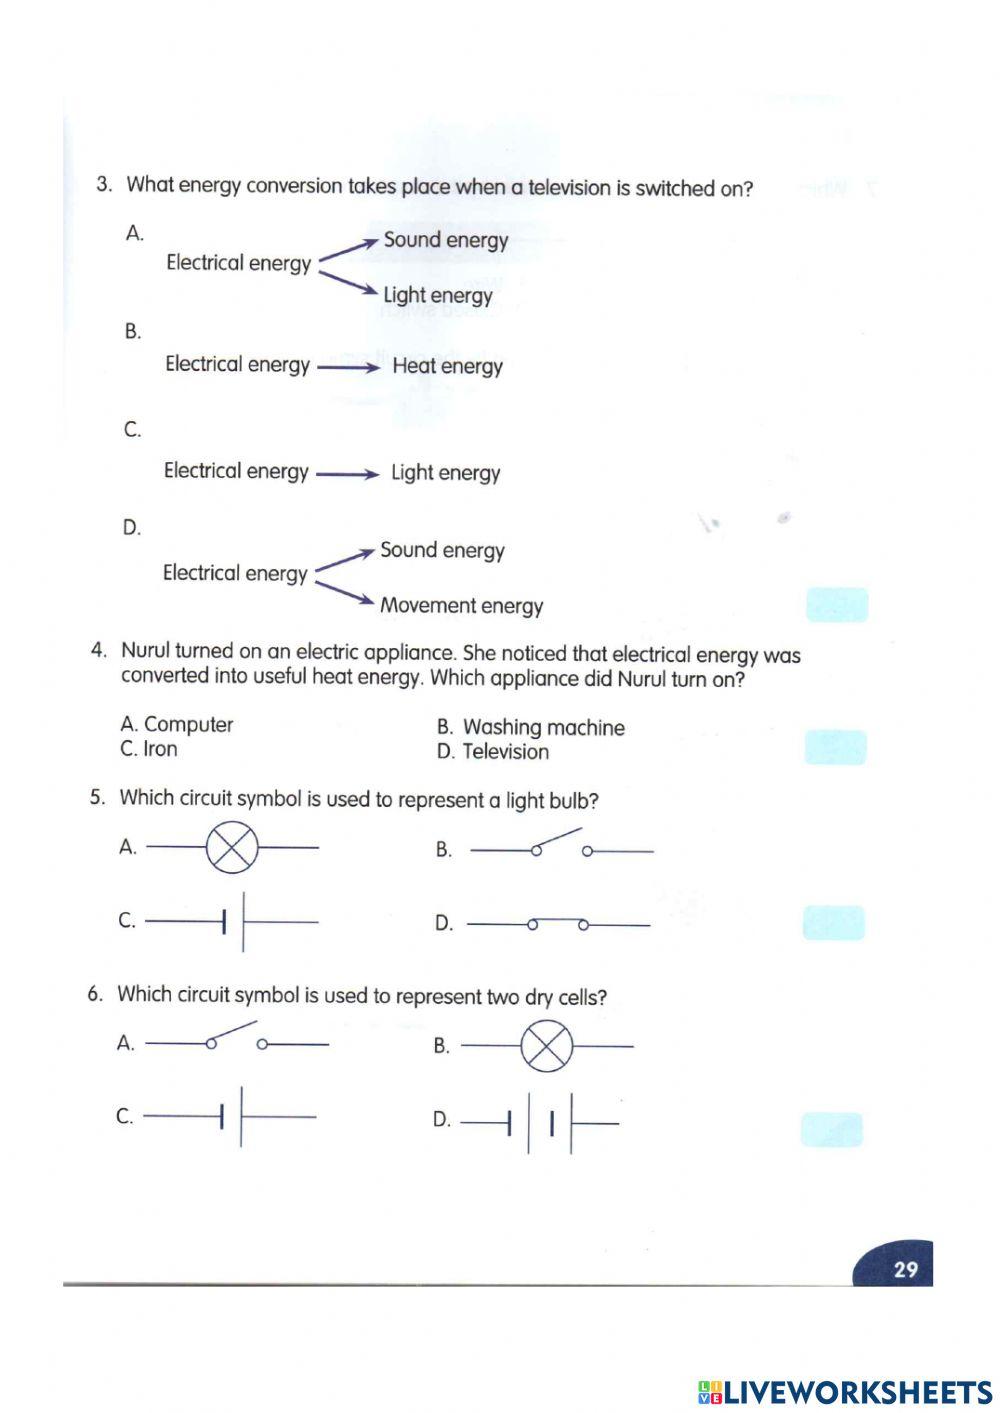 Psr revision 4: ELECTRICITY